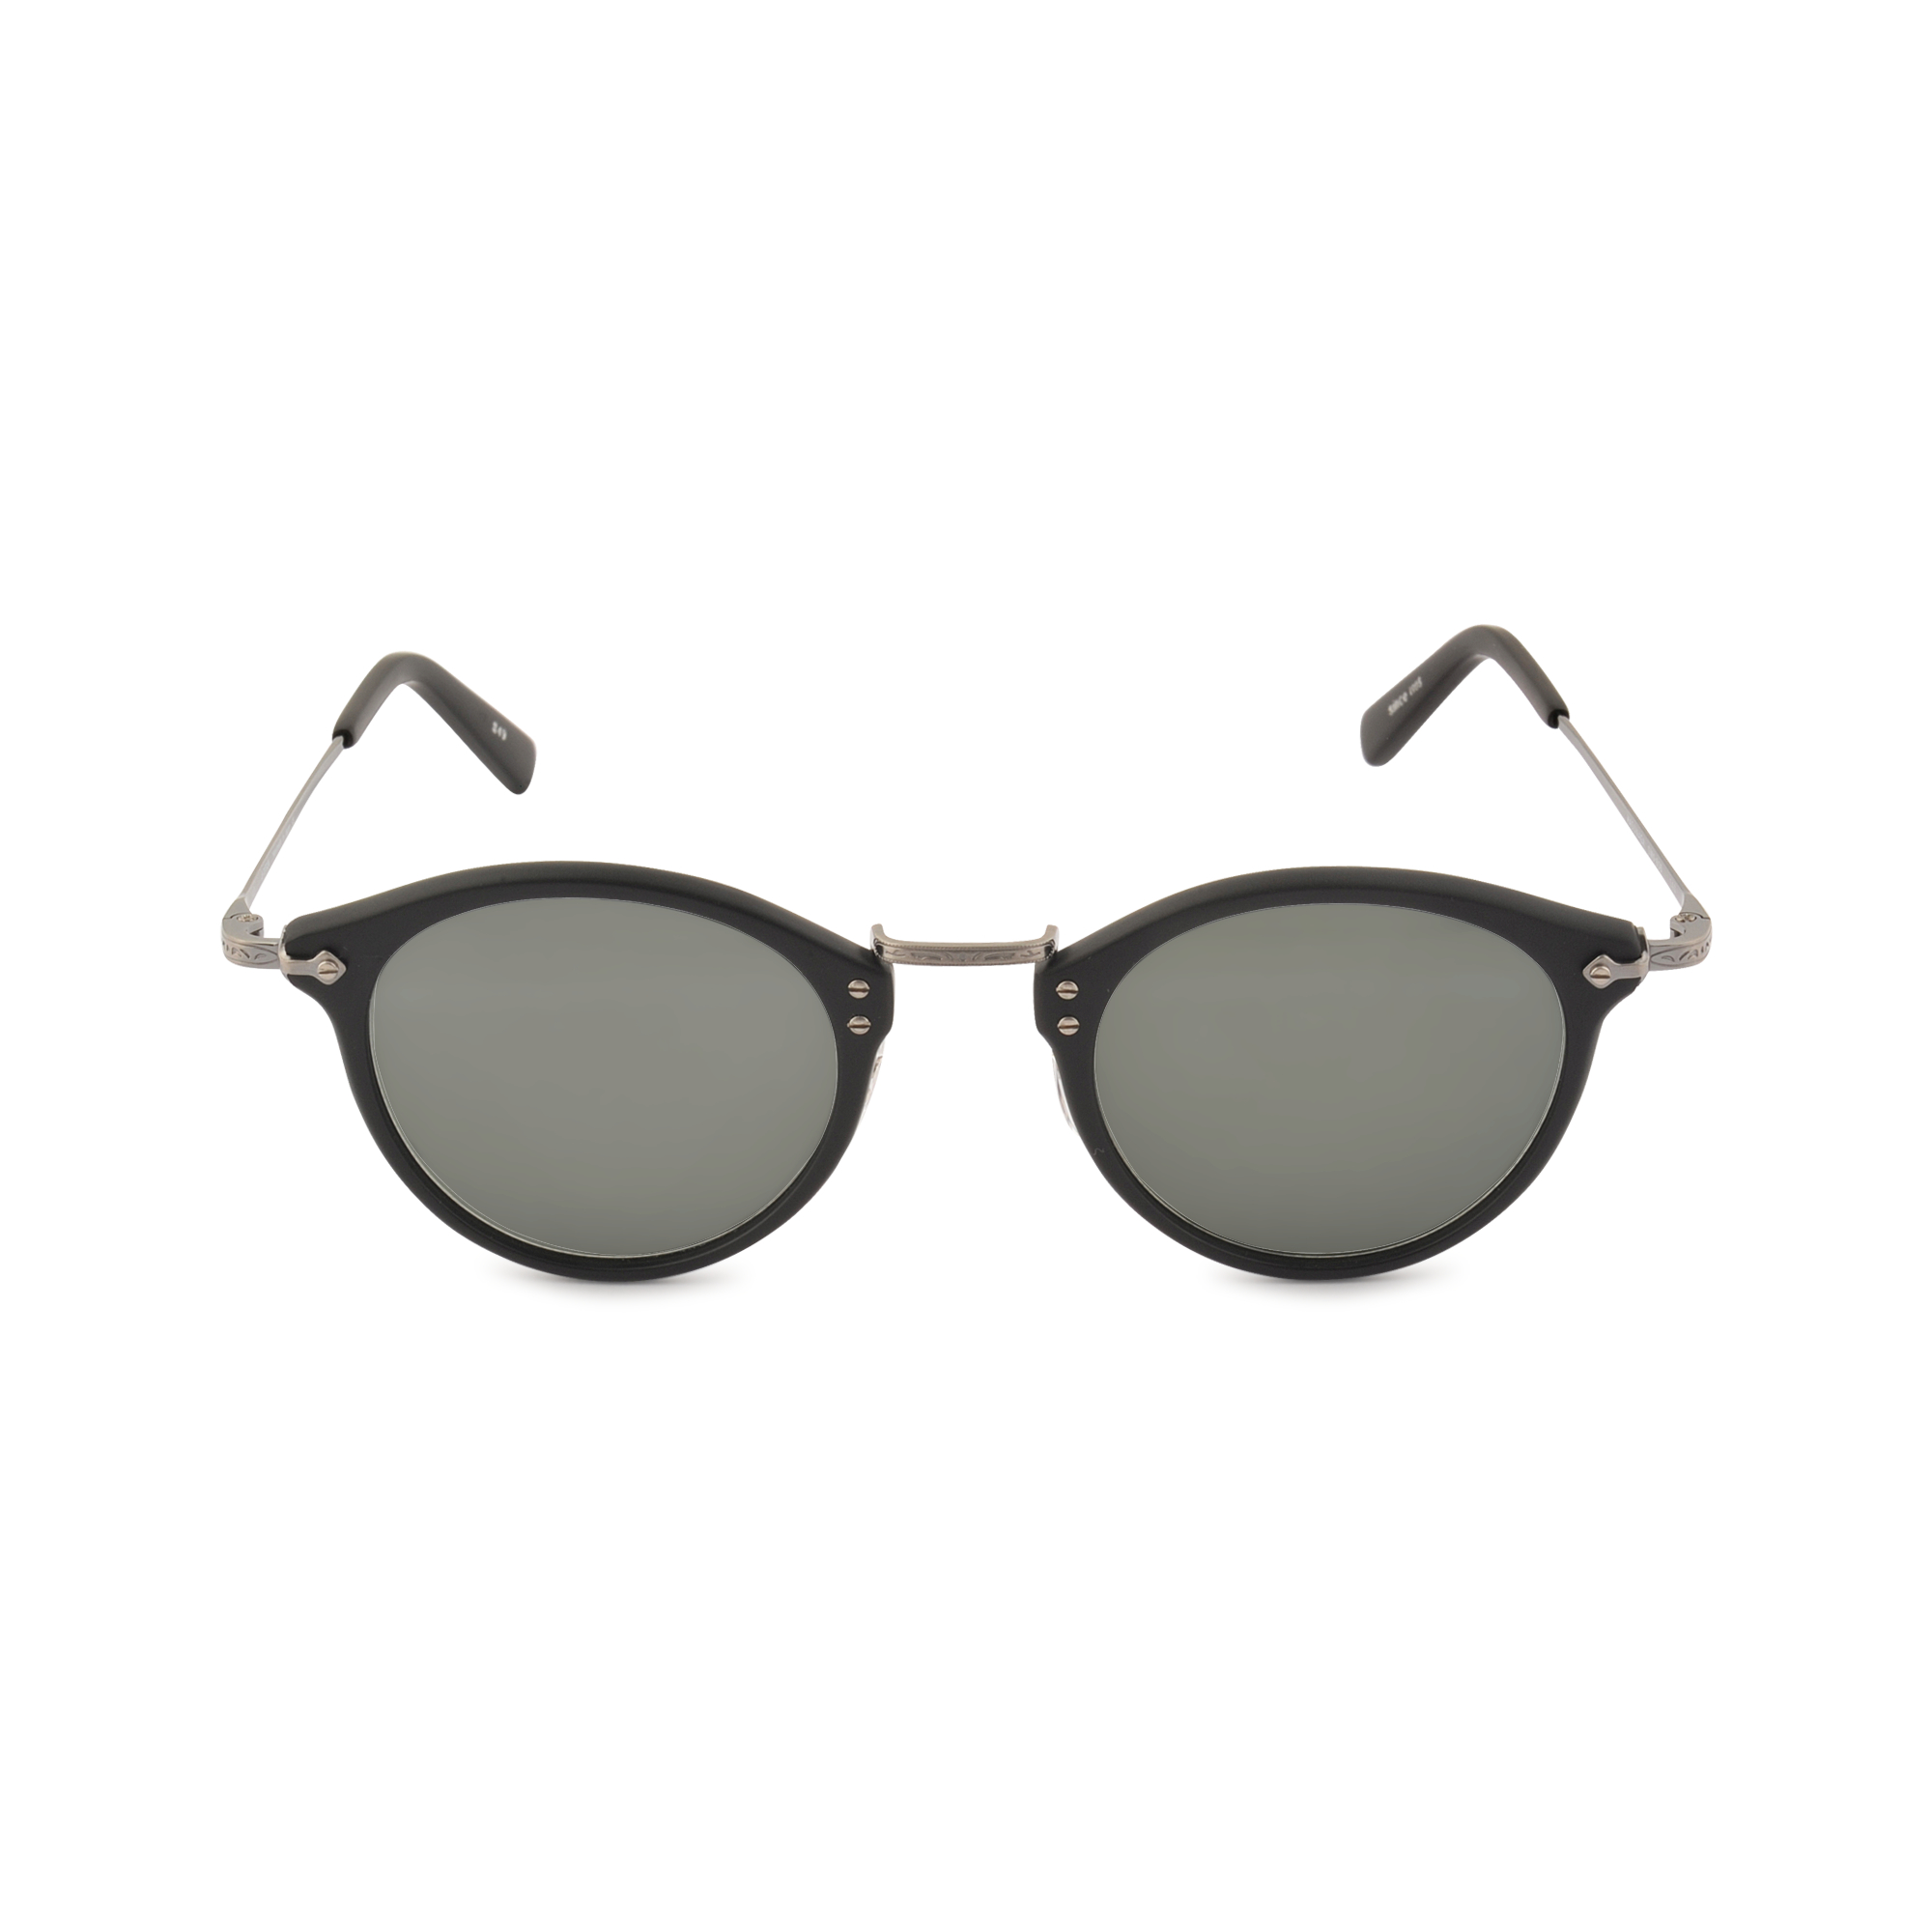 Masunaga Gms-805 Sunglasses in Black - Lyst